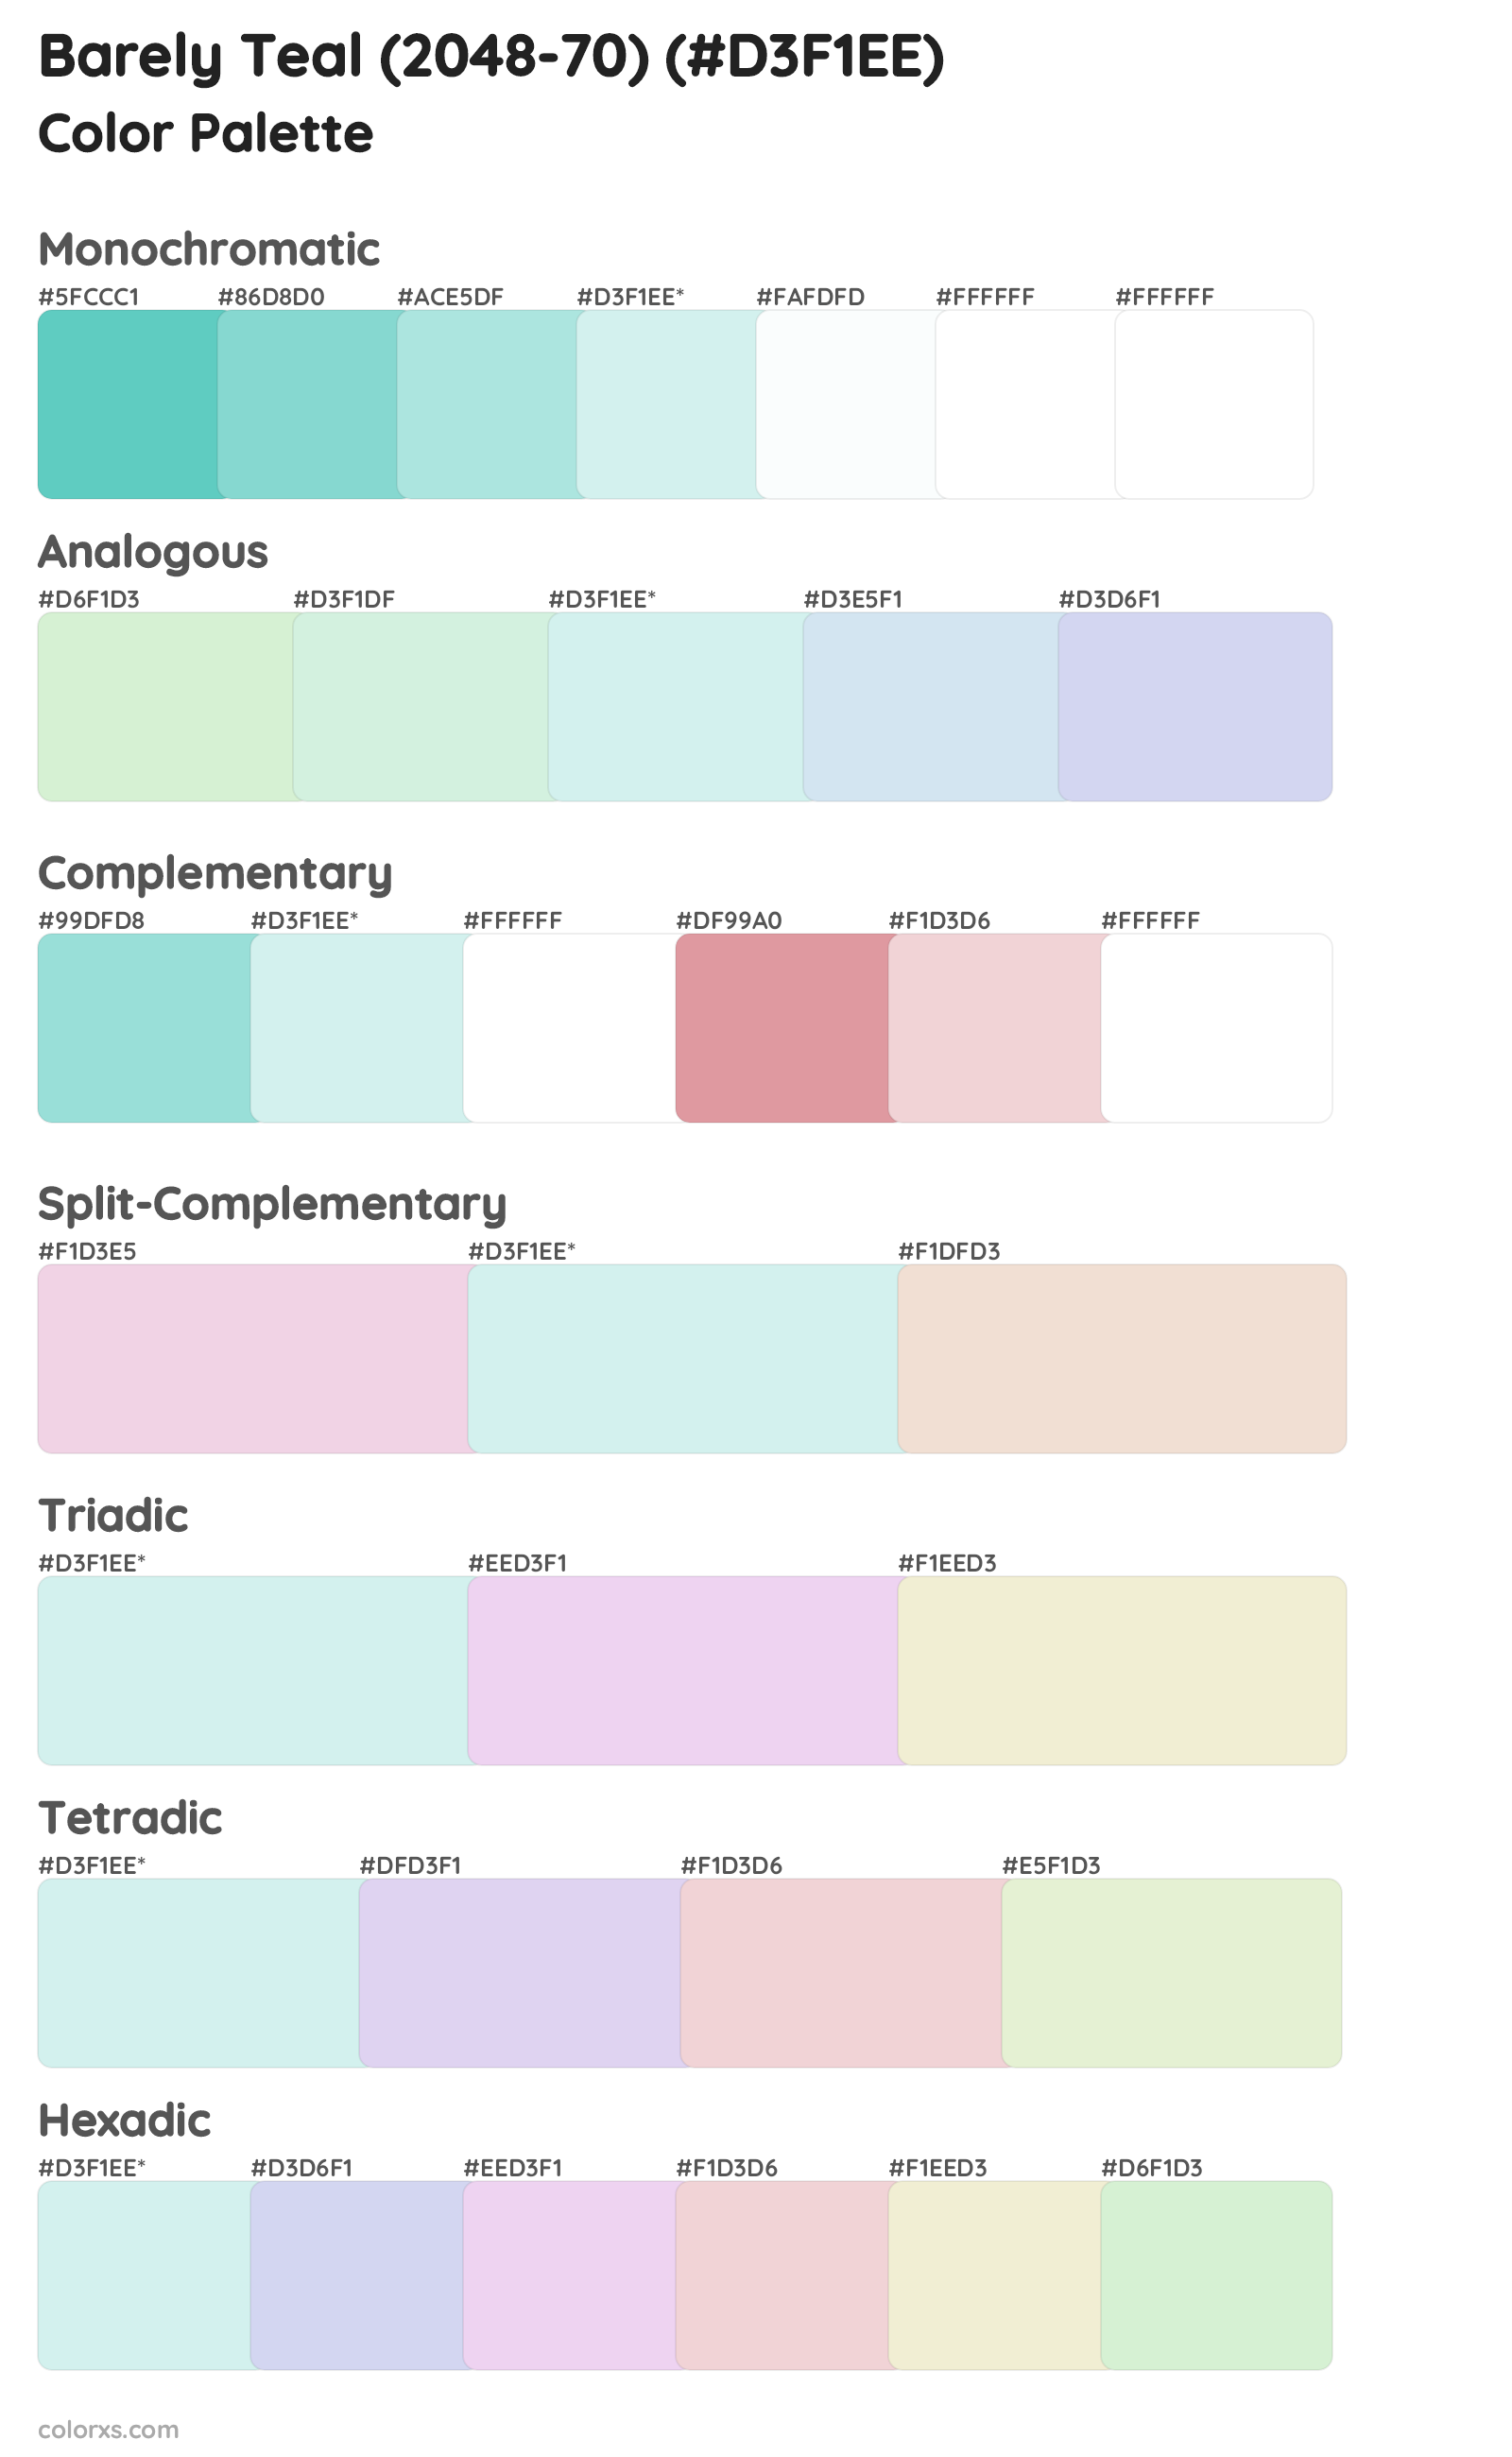 Barely Teal (2048-70) Color Scheme Palettes